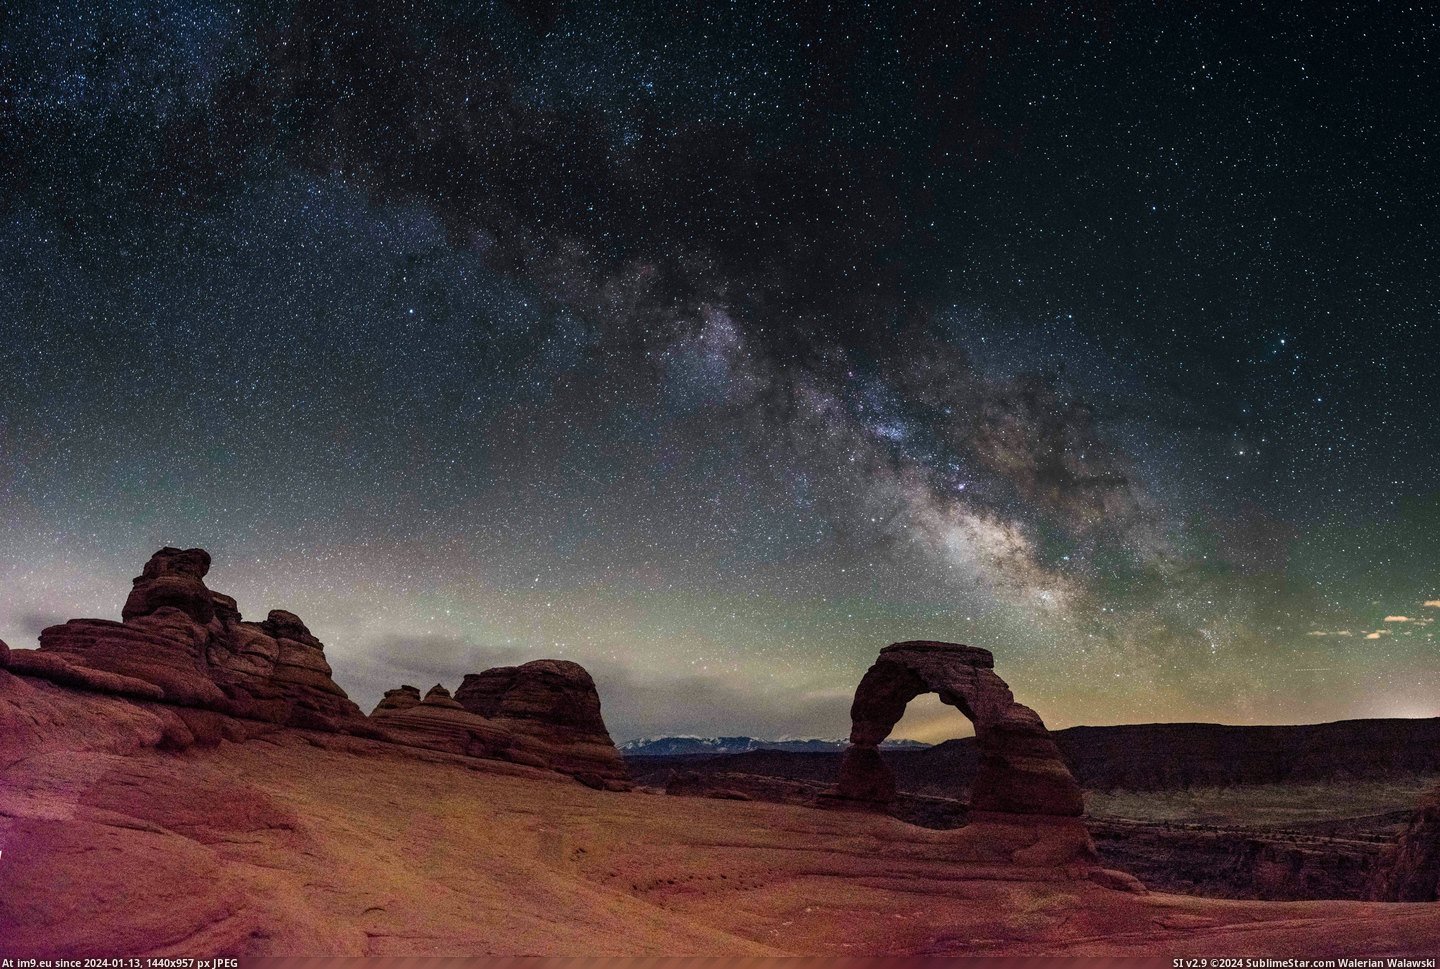 #Park #Night #National #6000x4000 #Arches #Hours #Utah #Drove [Earthporn] I drove 6 hours to Arches National Park in Utah last night [6000x4000] Pic. (Bild von album My r/EARTHPORN favs))